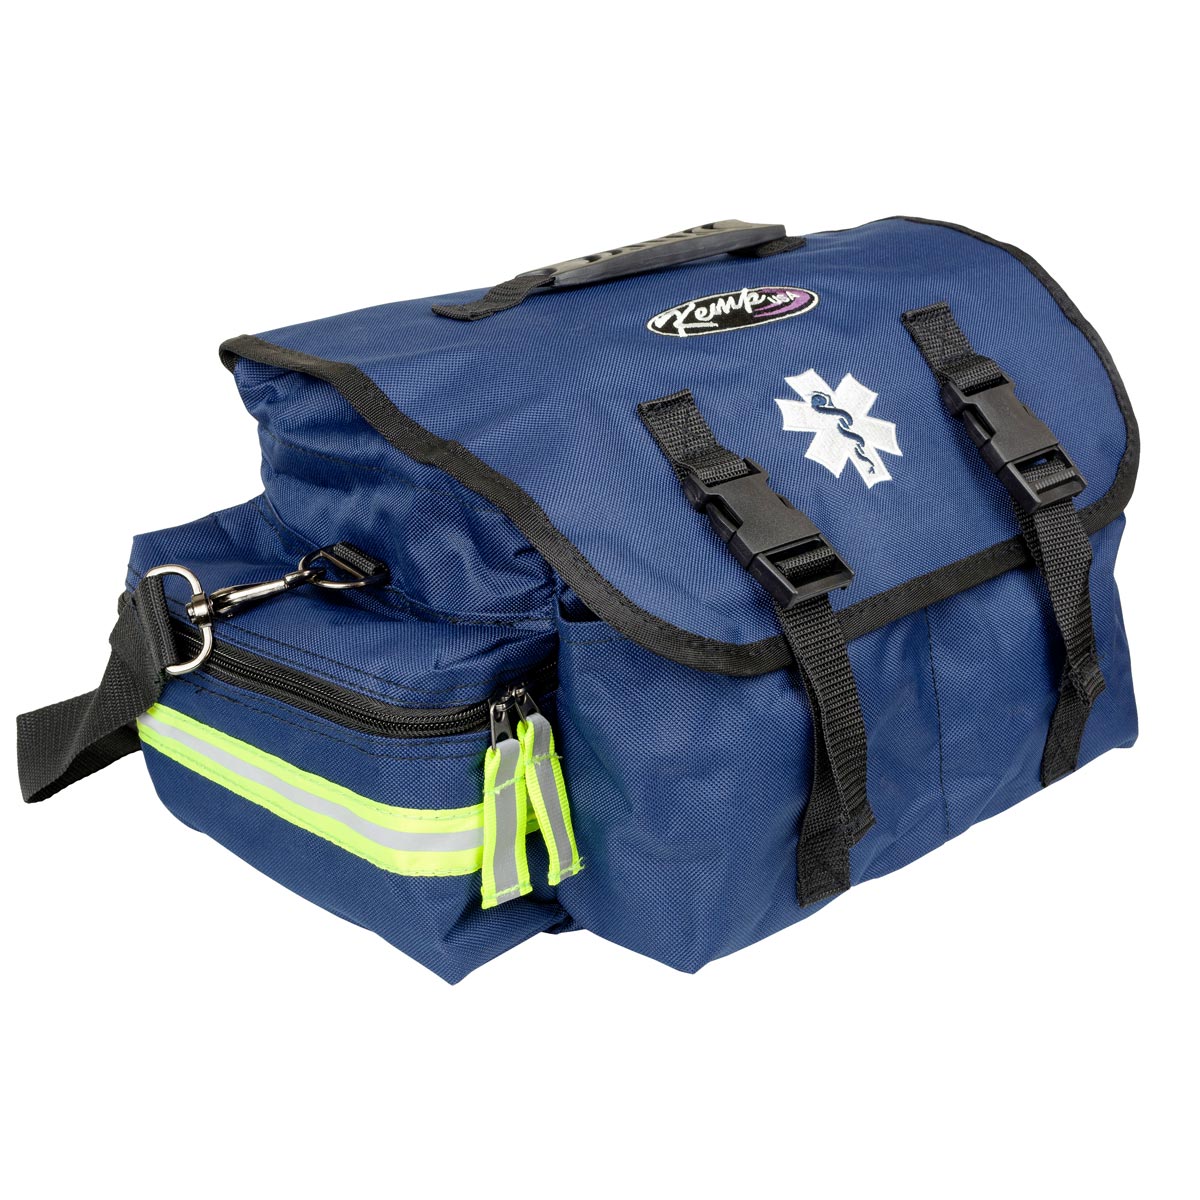 DHS Emergency Medical Responder Kit